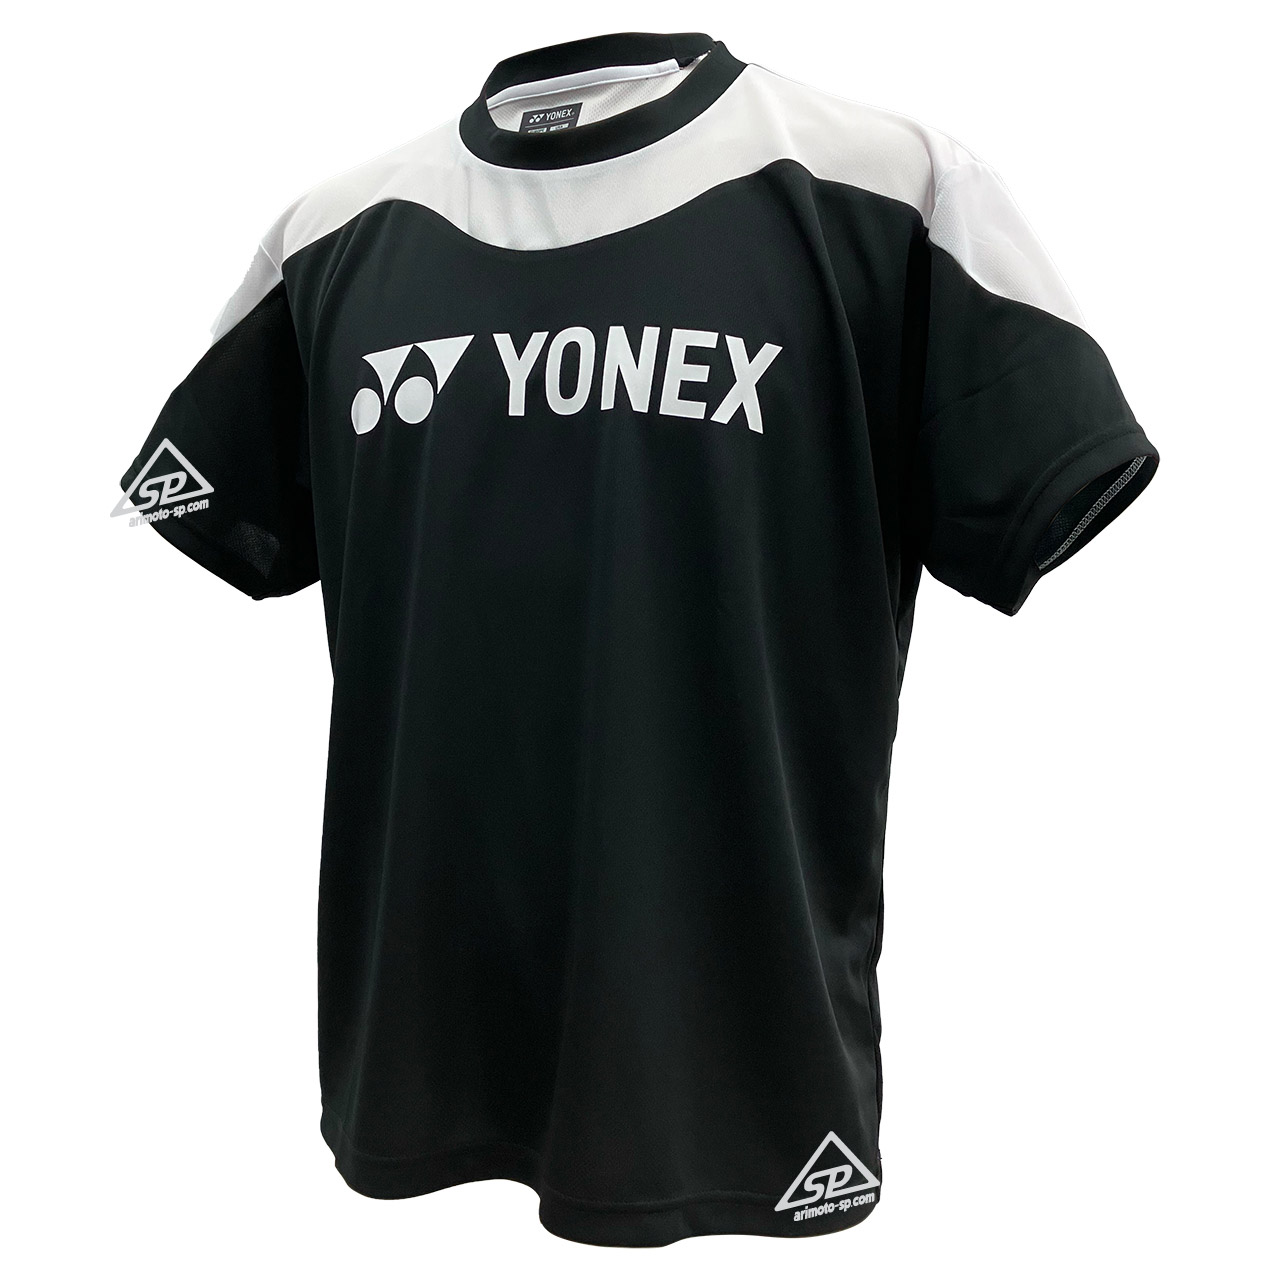 YONEX 限定Tシャツ YOB22030 4色入荷しました。